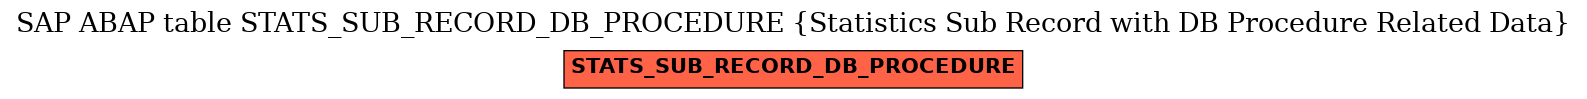 E-R Diagram for table STATS_SUB_RECORD_DB_PROCEDURE (Statistics Sub Record with DB Procedure Related Data)